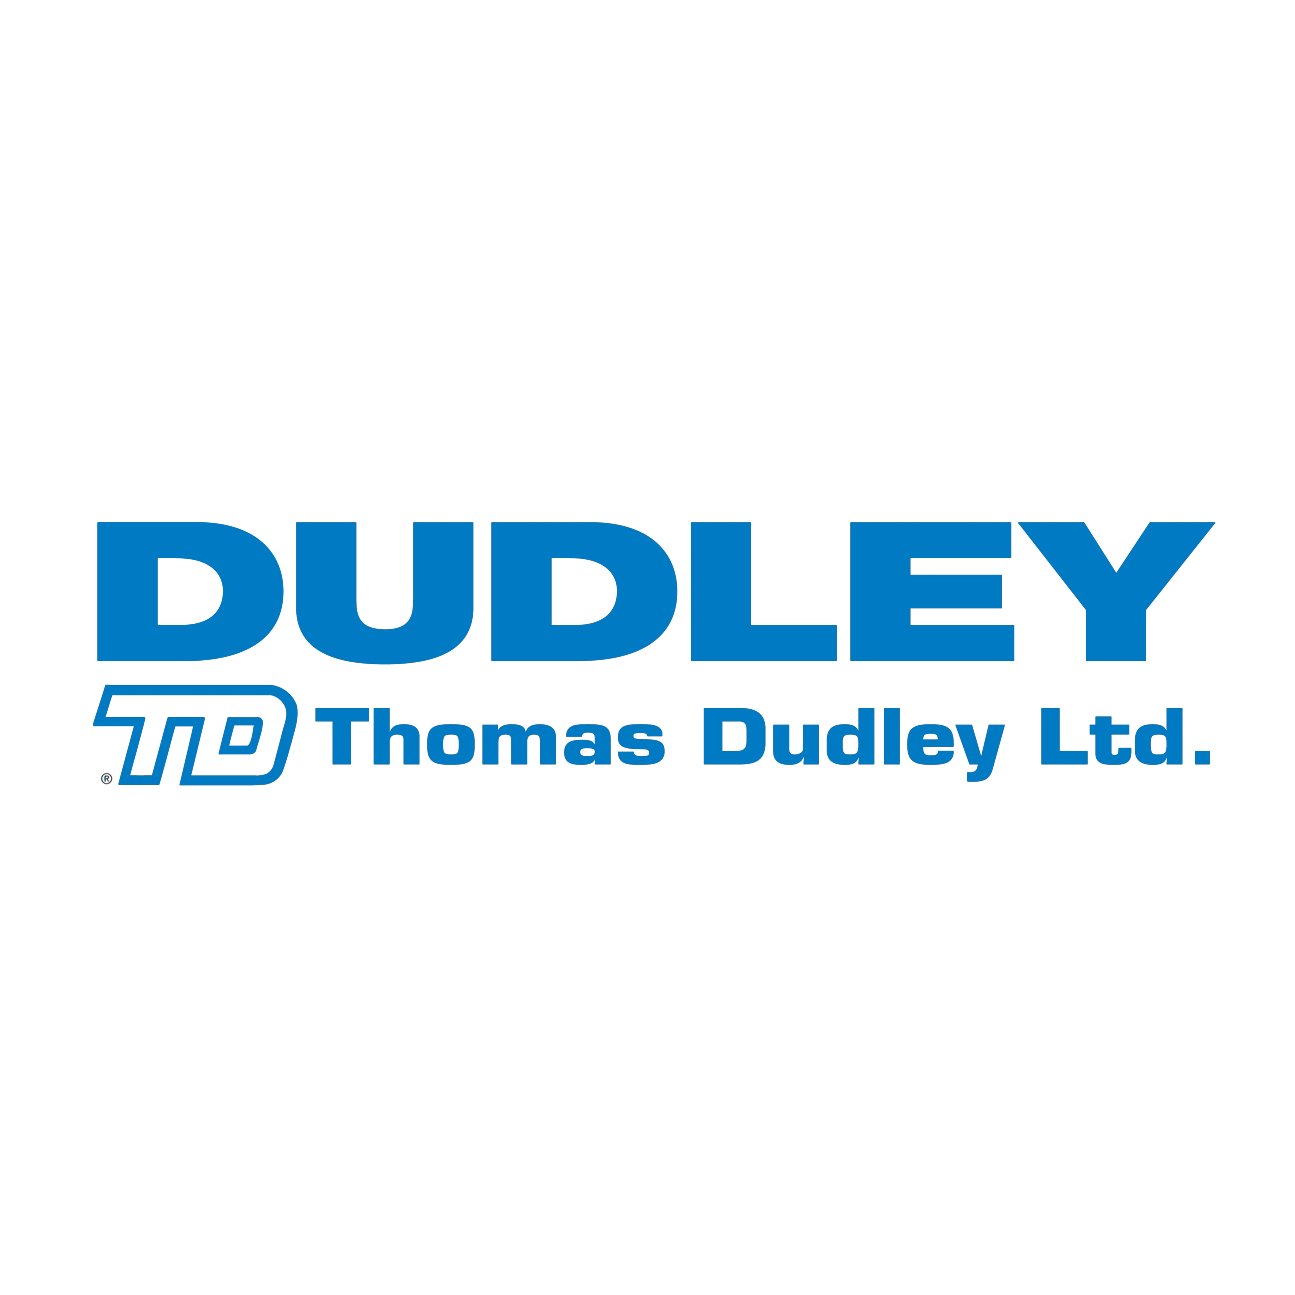 Thomas Dudley